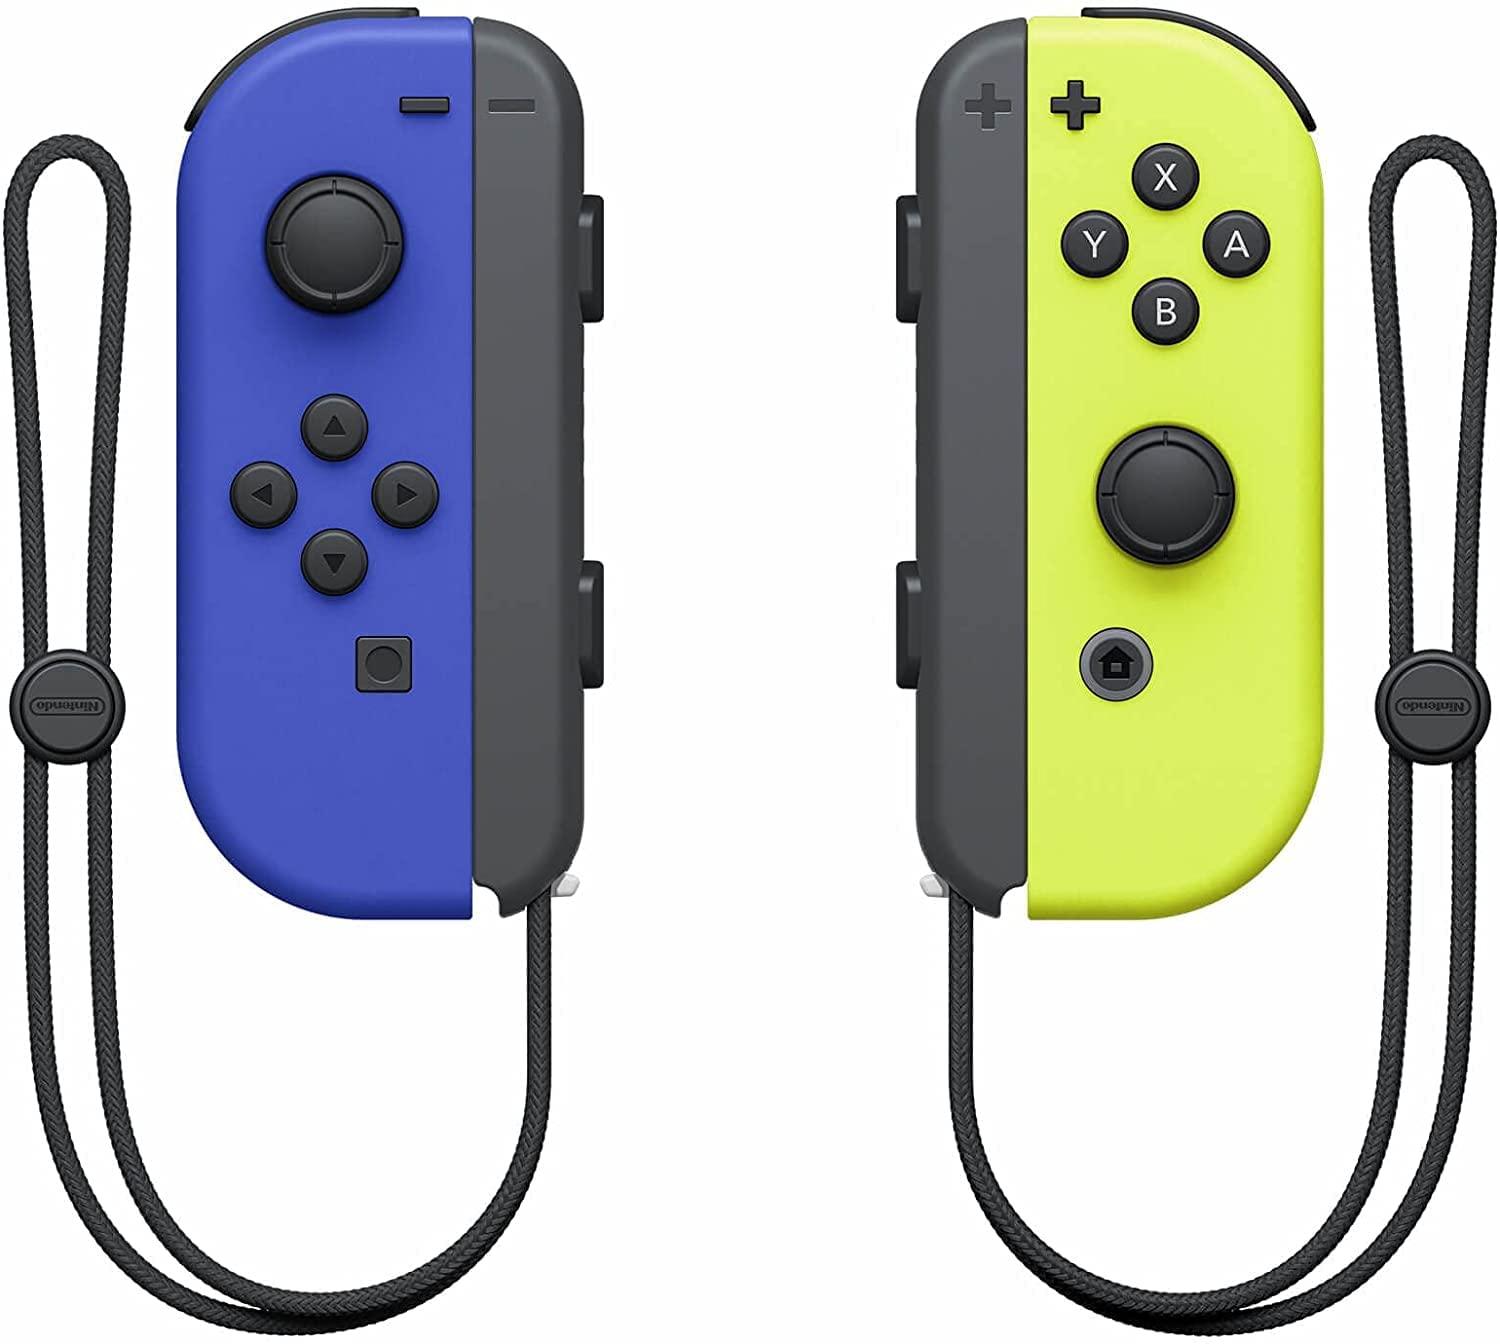 Nintendo Switch Joy-Con Pair (Blue/Neon Yellow) - GameStore.mt | Powered by Flutisat